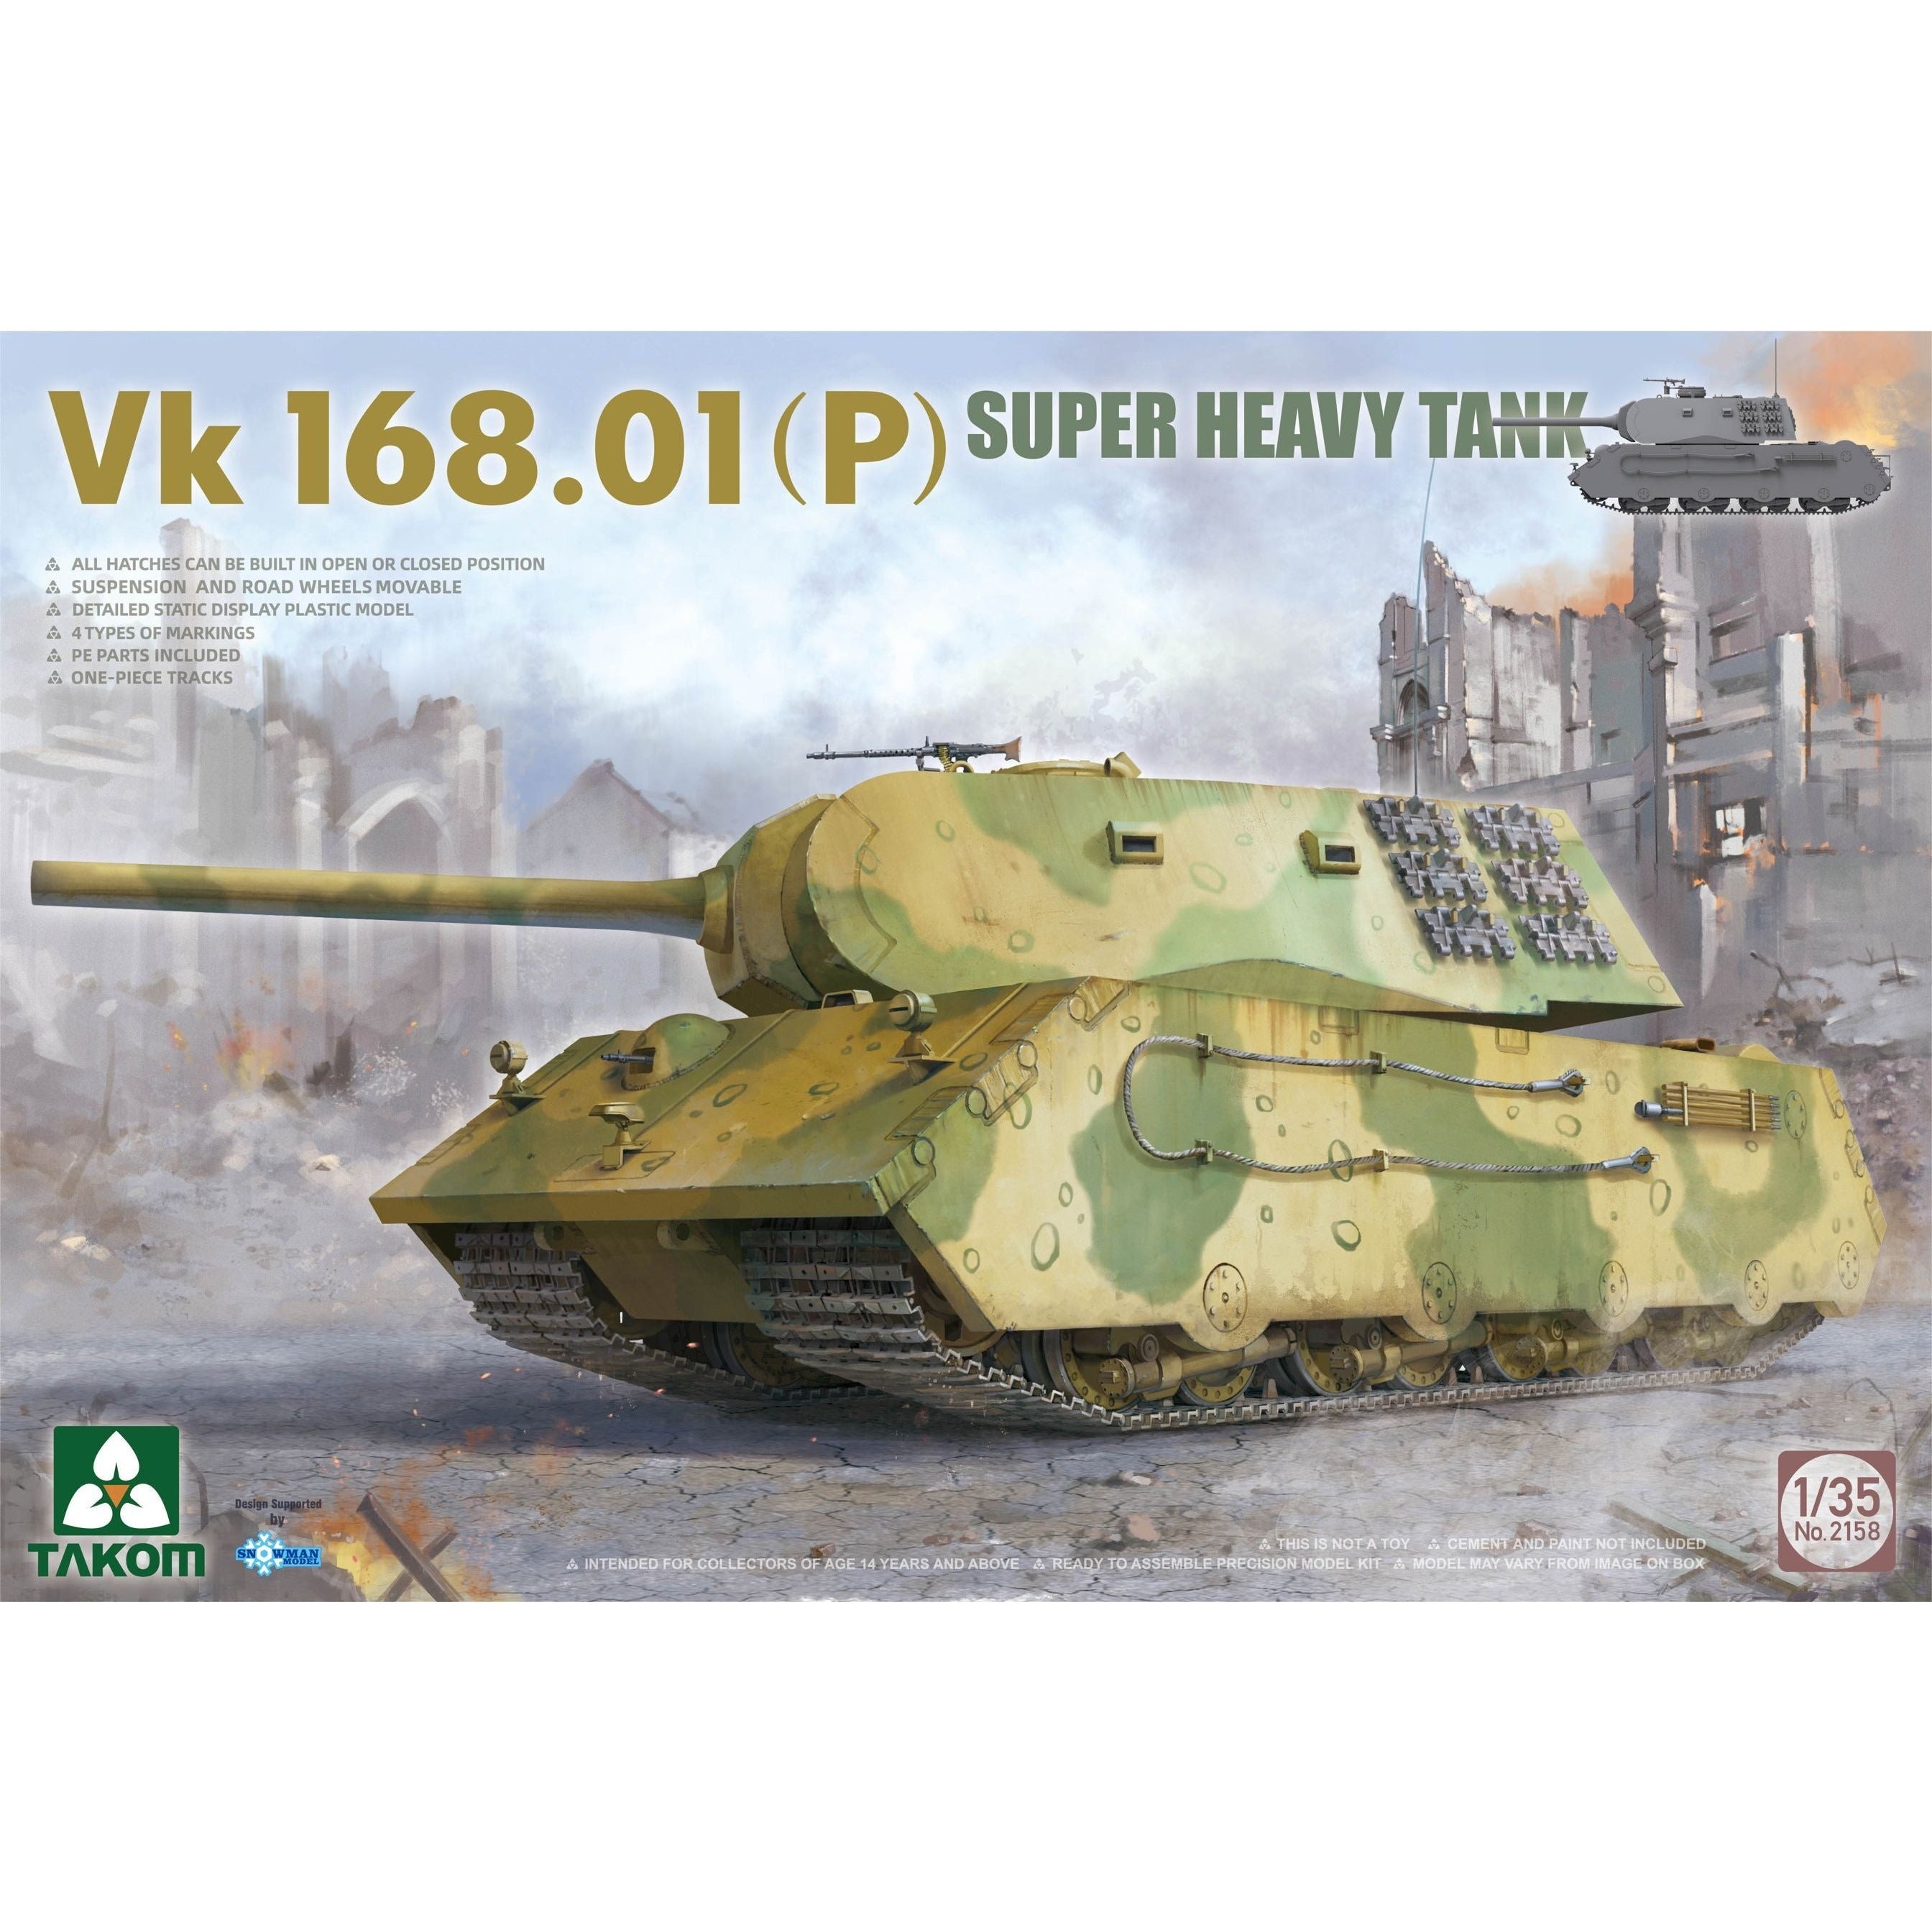 Vk 168.01(P) Super Heavy Tank 1/35 #2158 by Takom